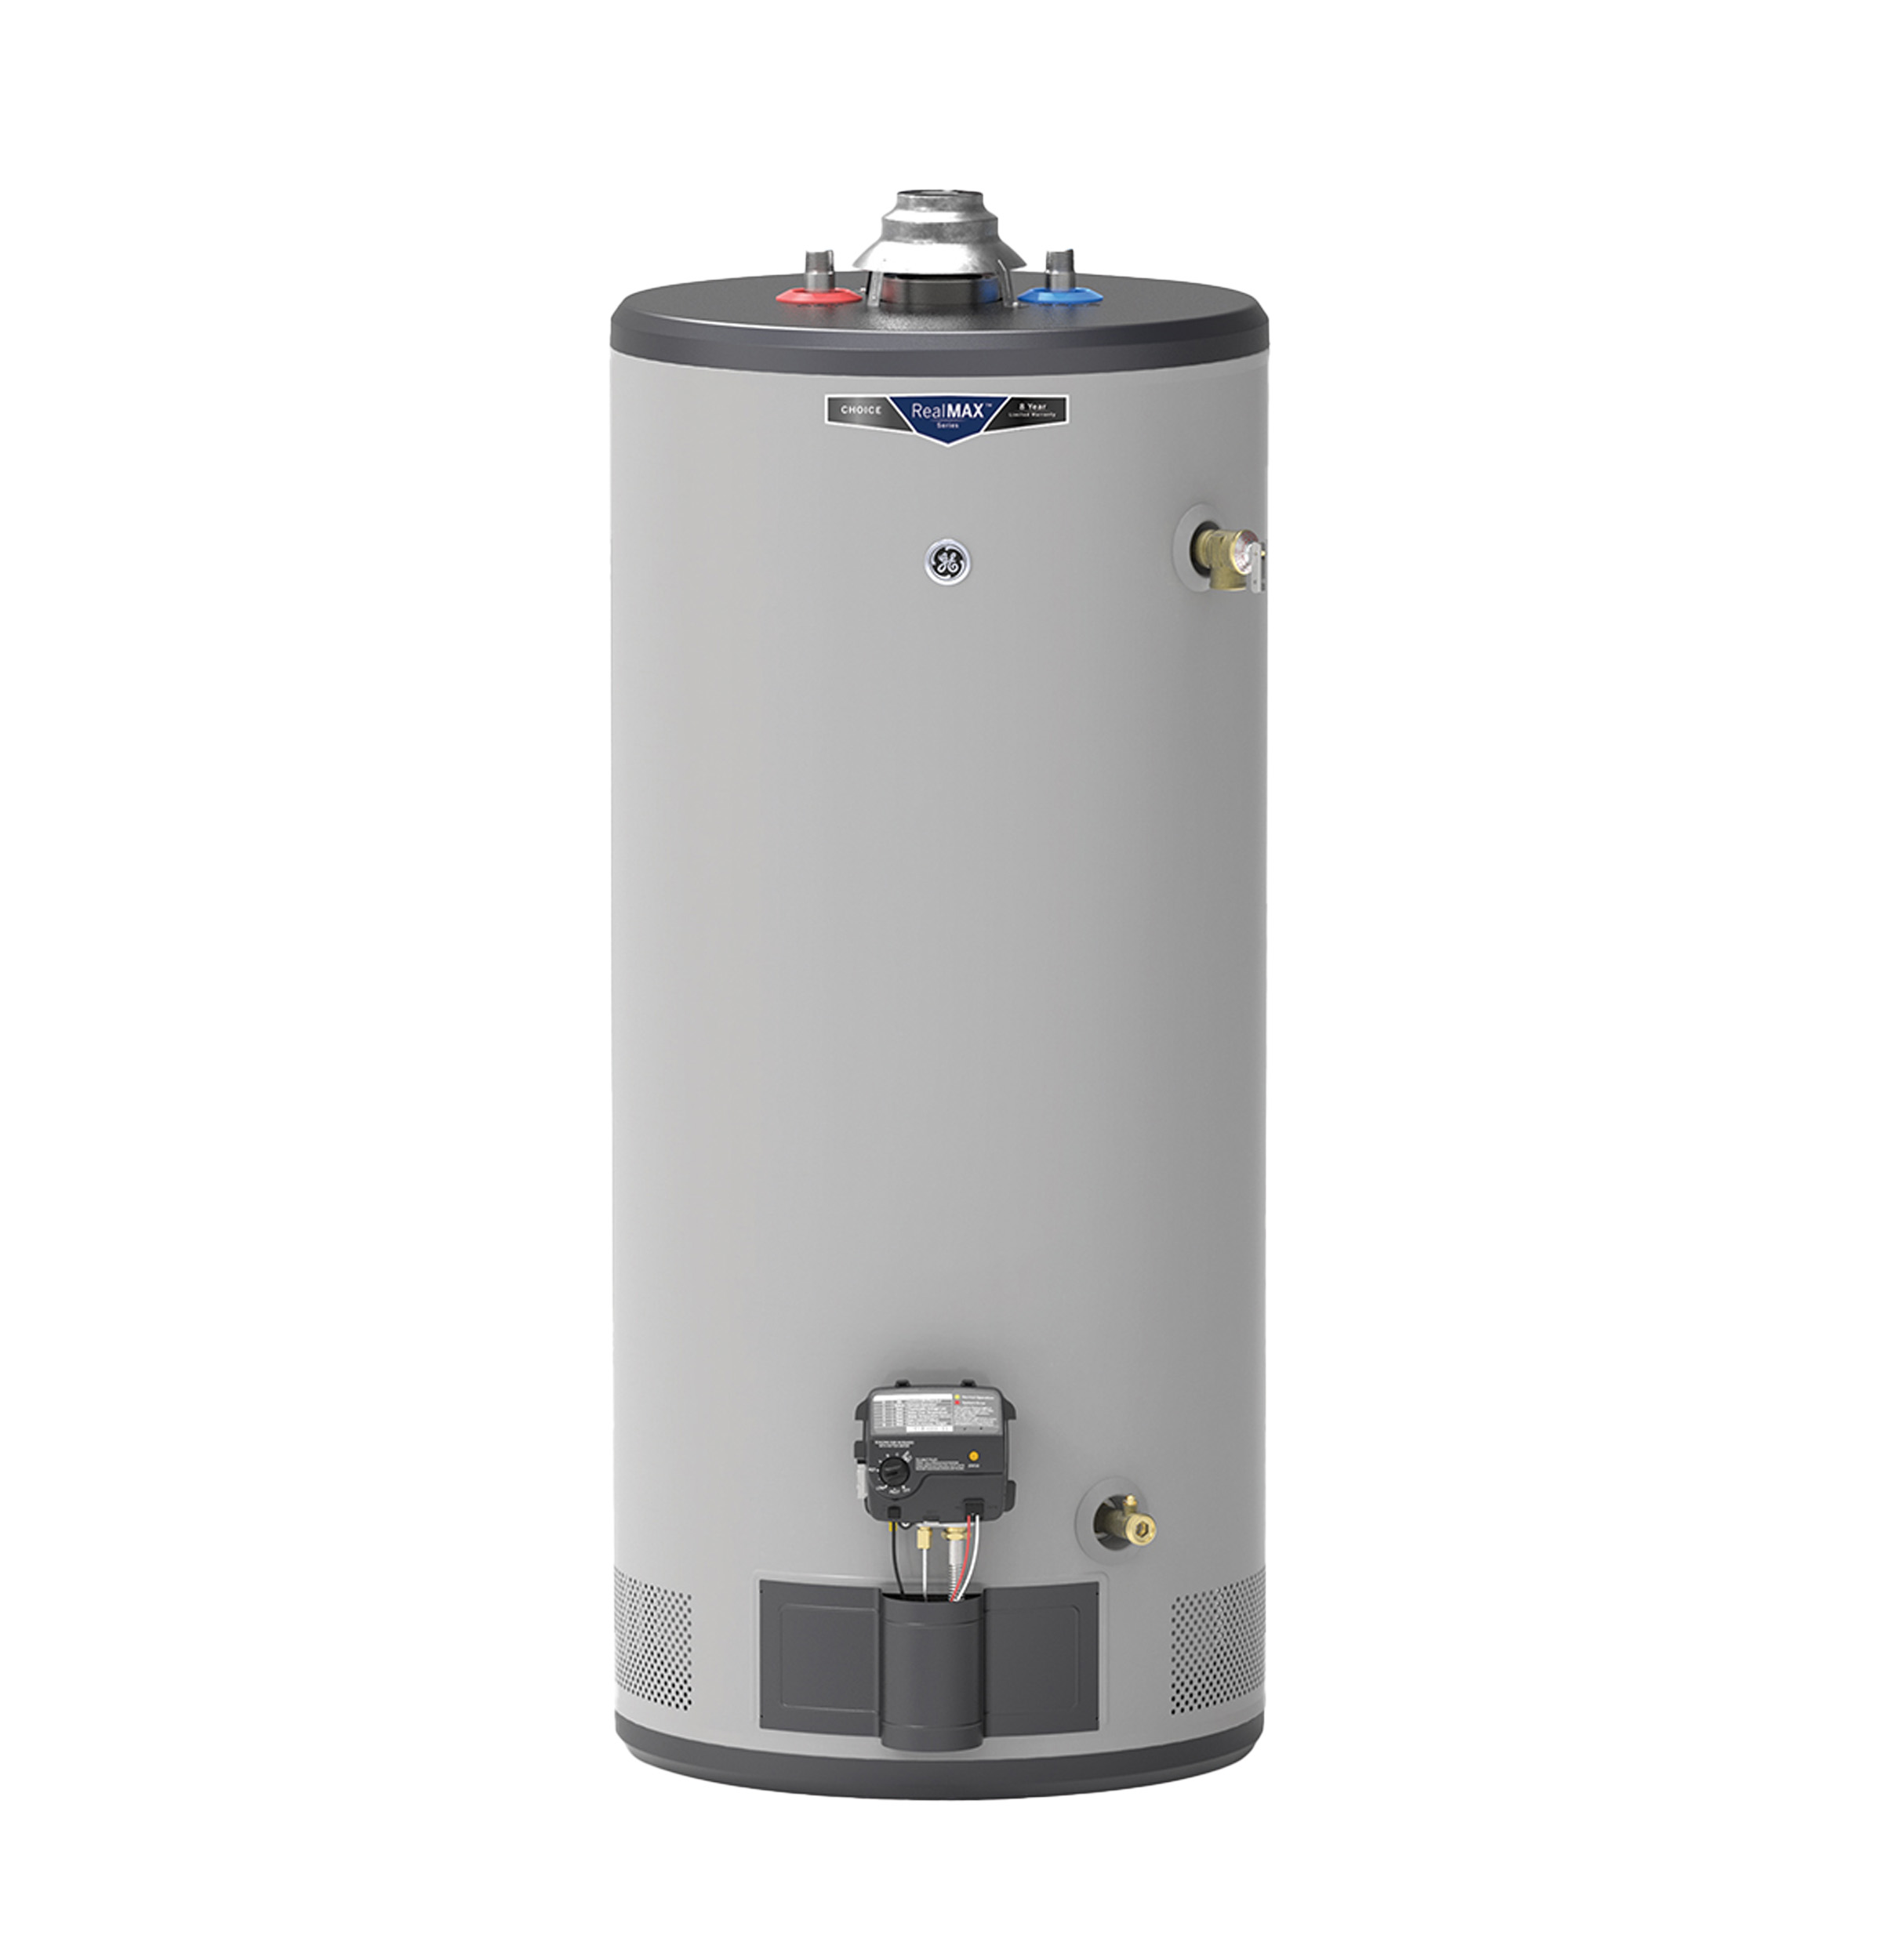 GE RealMAX Platinum 40-Gallon Short Natural Gas Atmospheric Water Heater